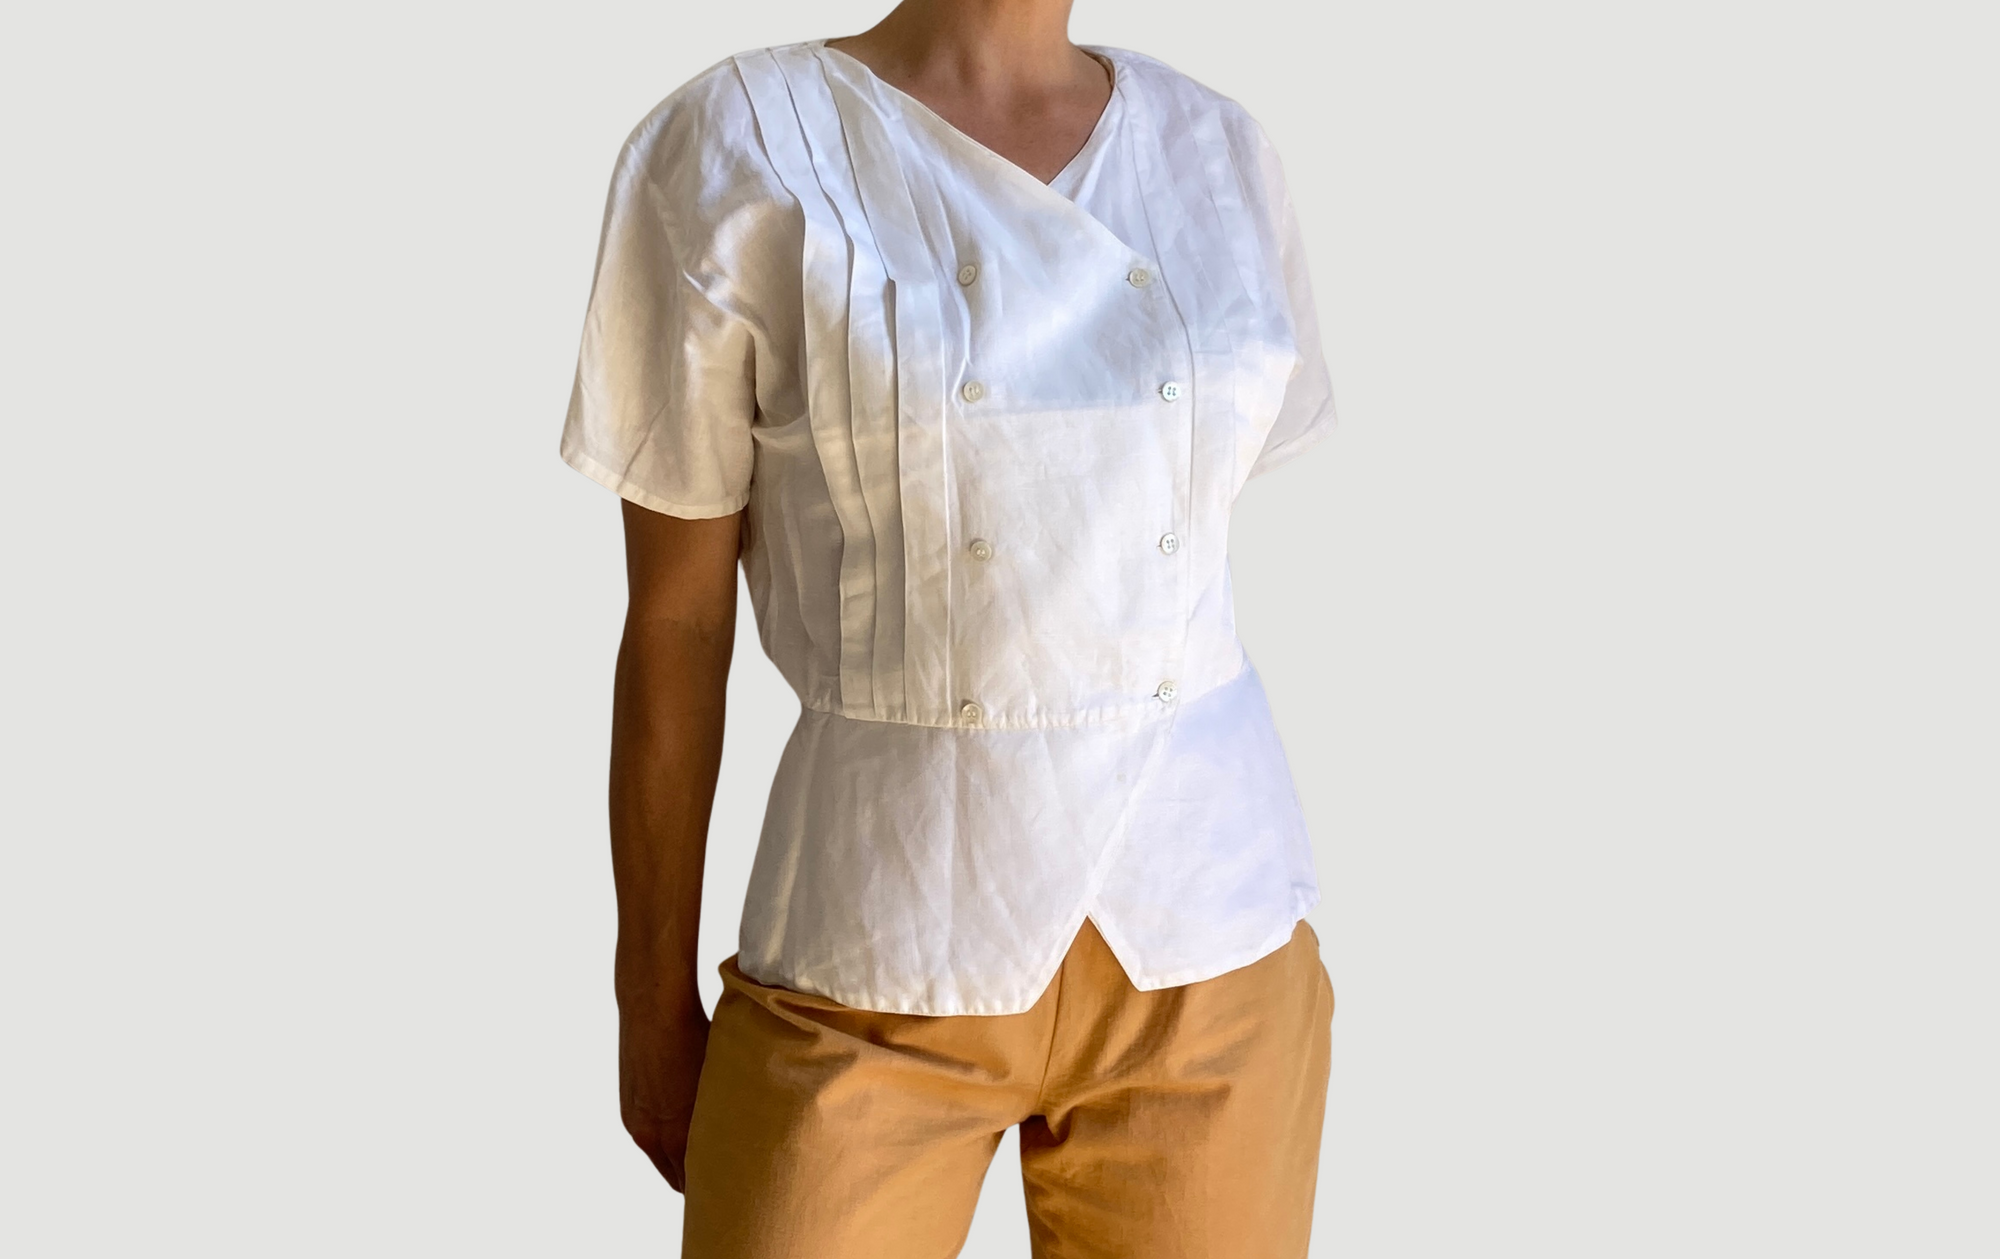 Ivory White blouse